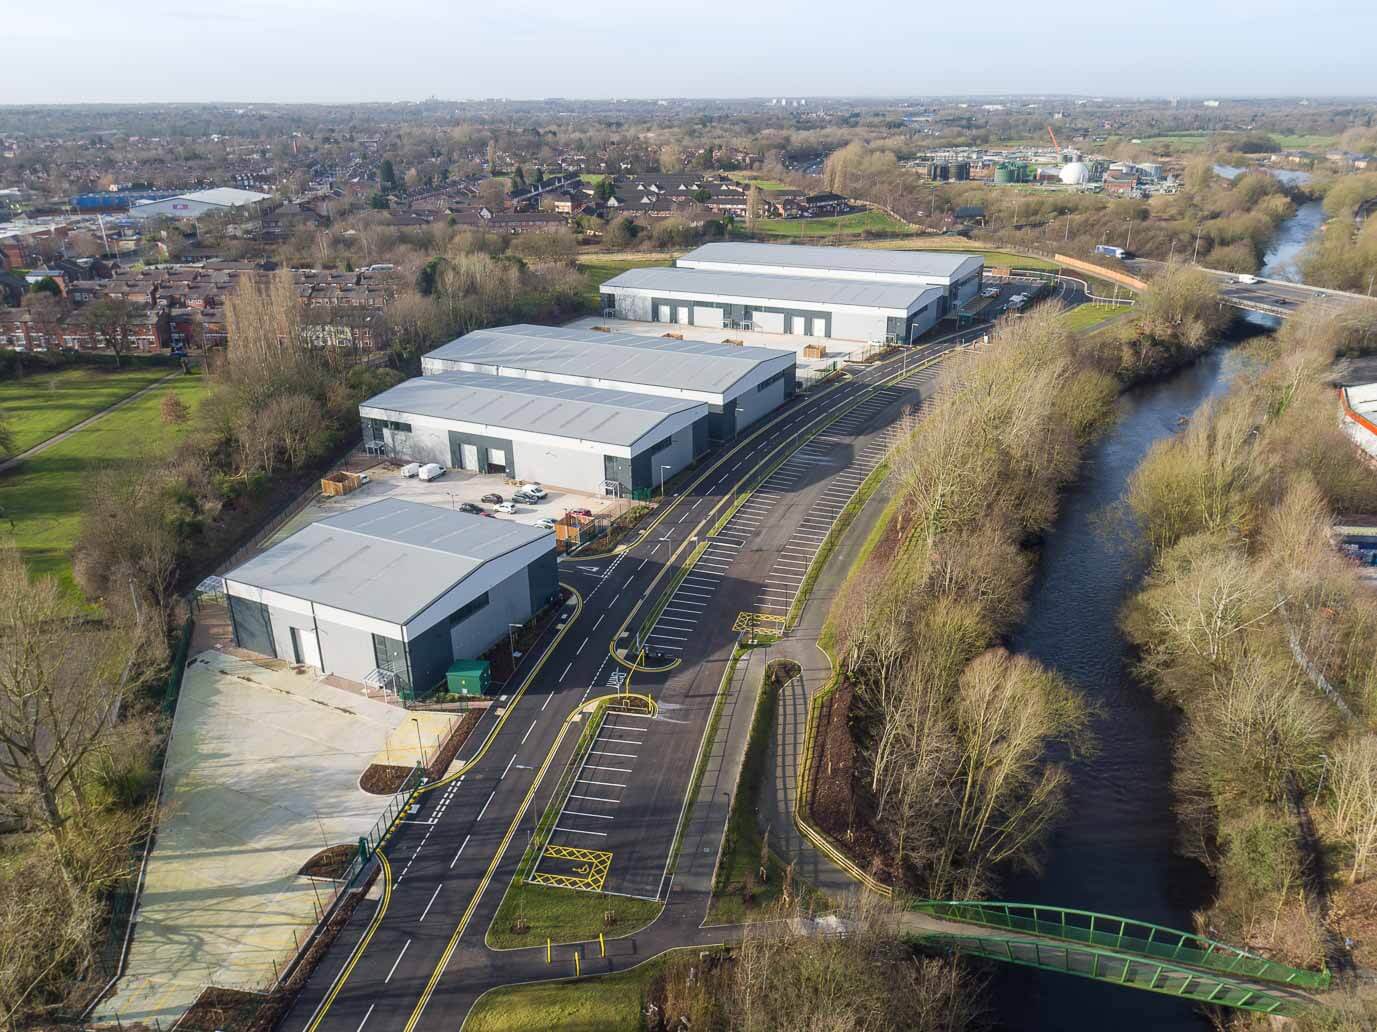 Aerial photography - Aurora Stockport industrial units for Seddon Construction - Midi (Architectural, Interior, Construction & Aerial) Photography, Wigan